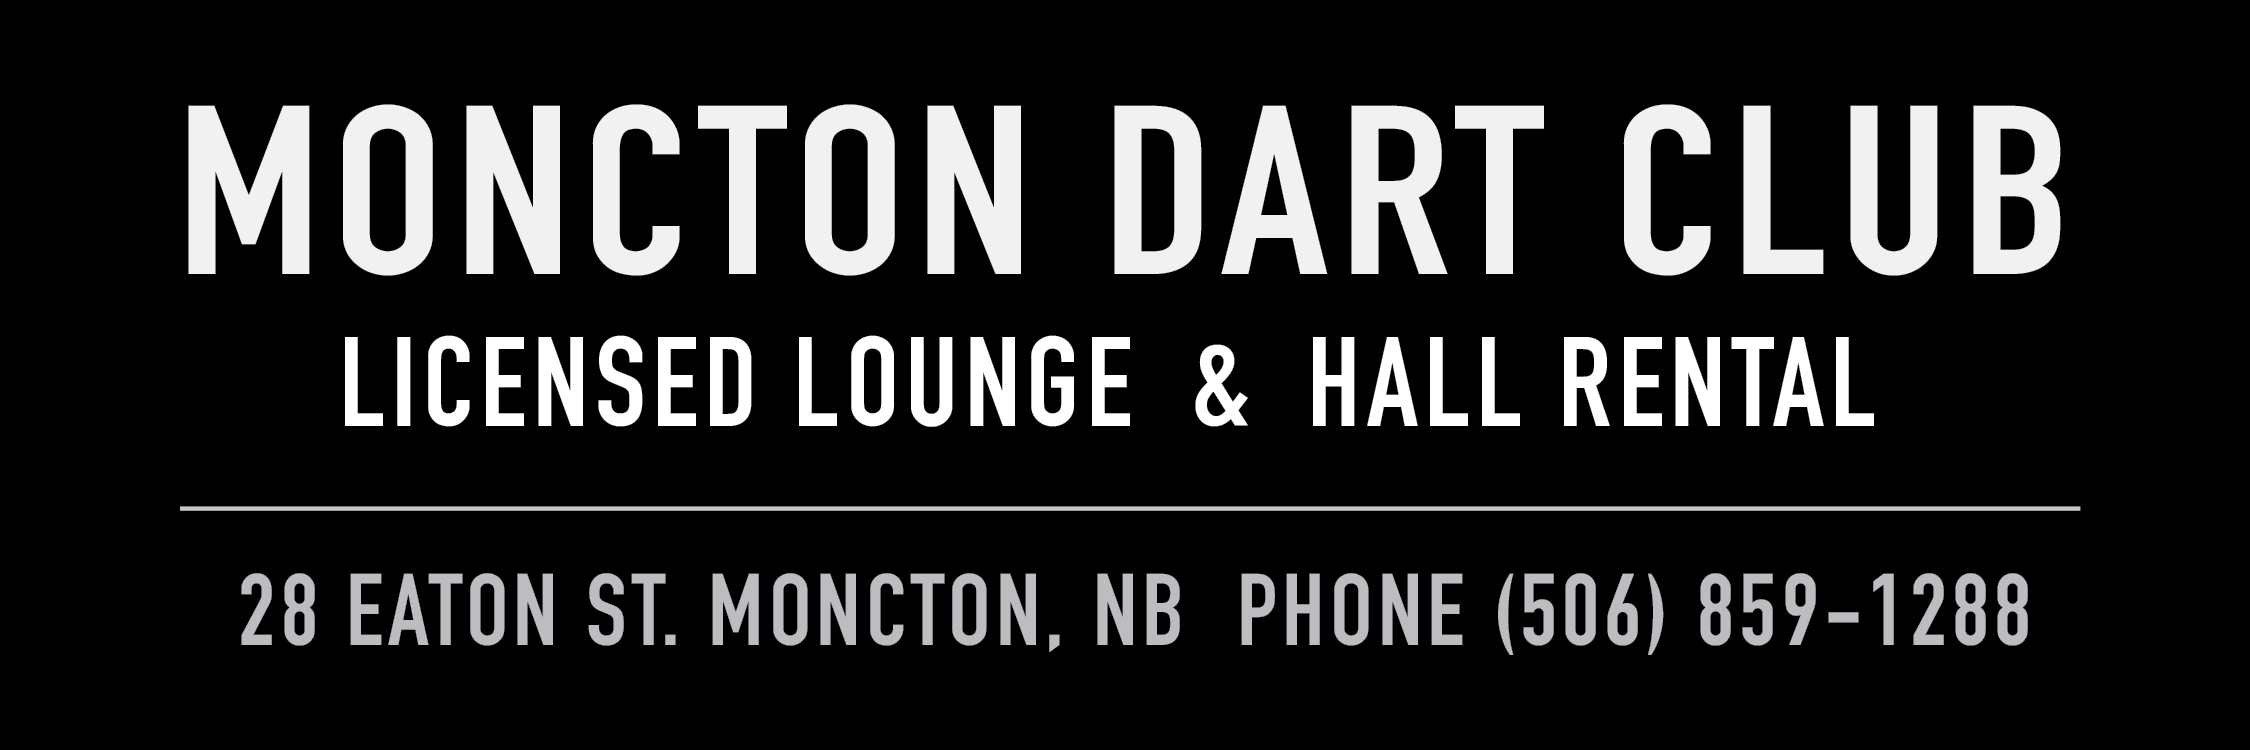 Moncton Dart Club